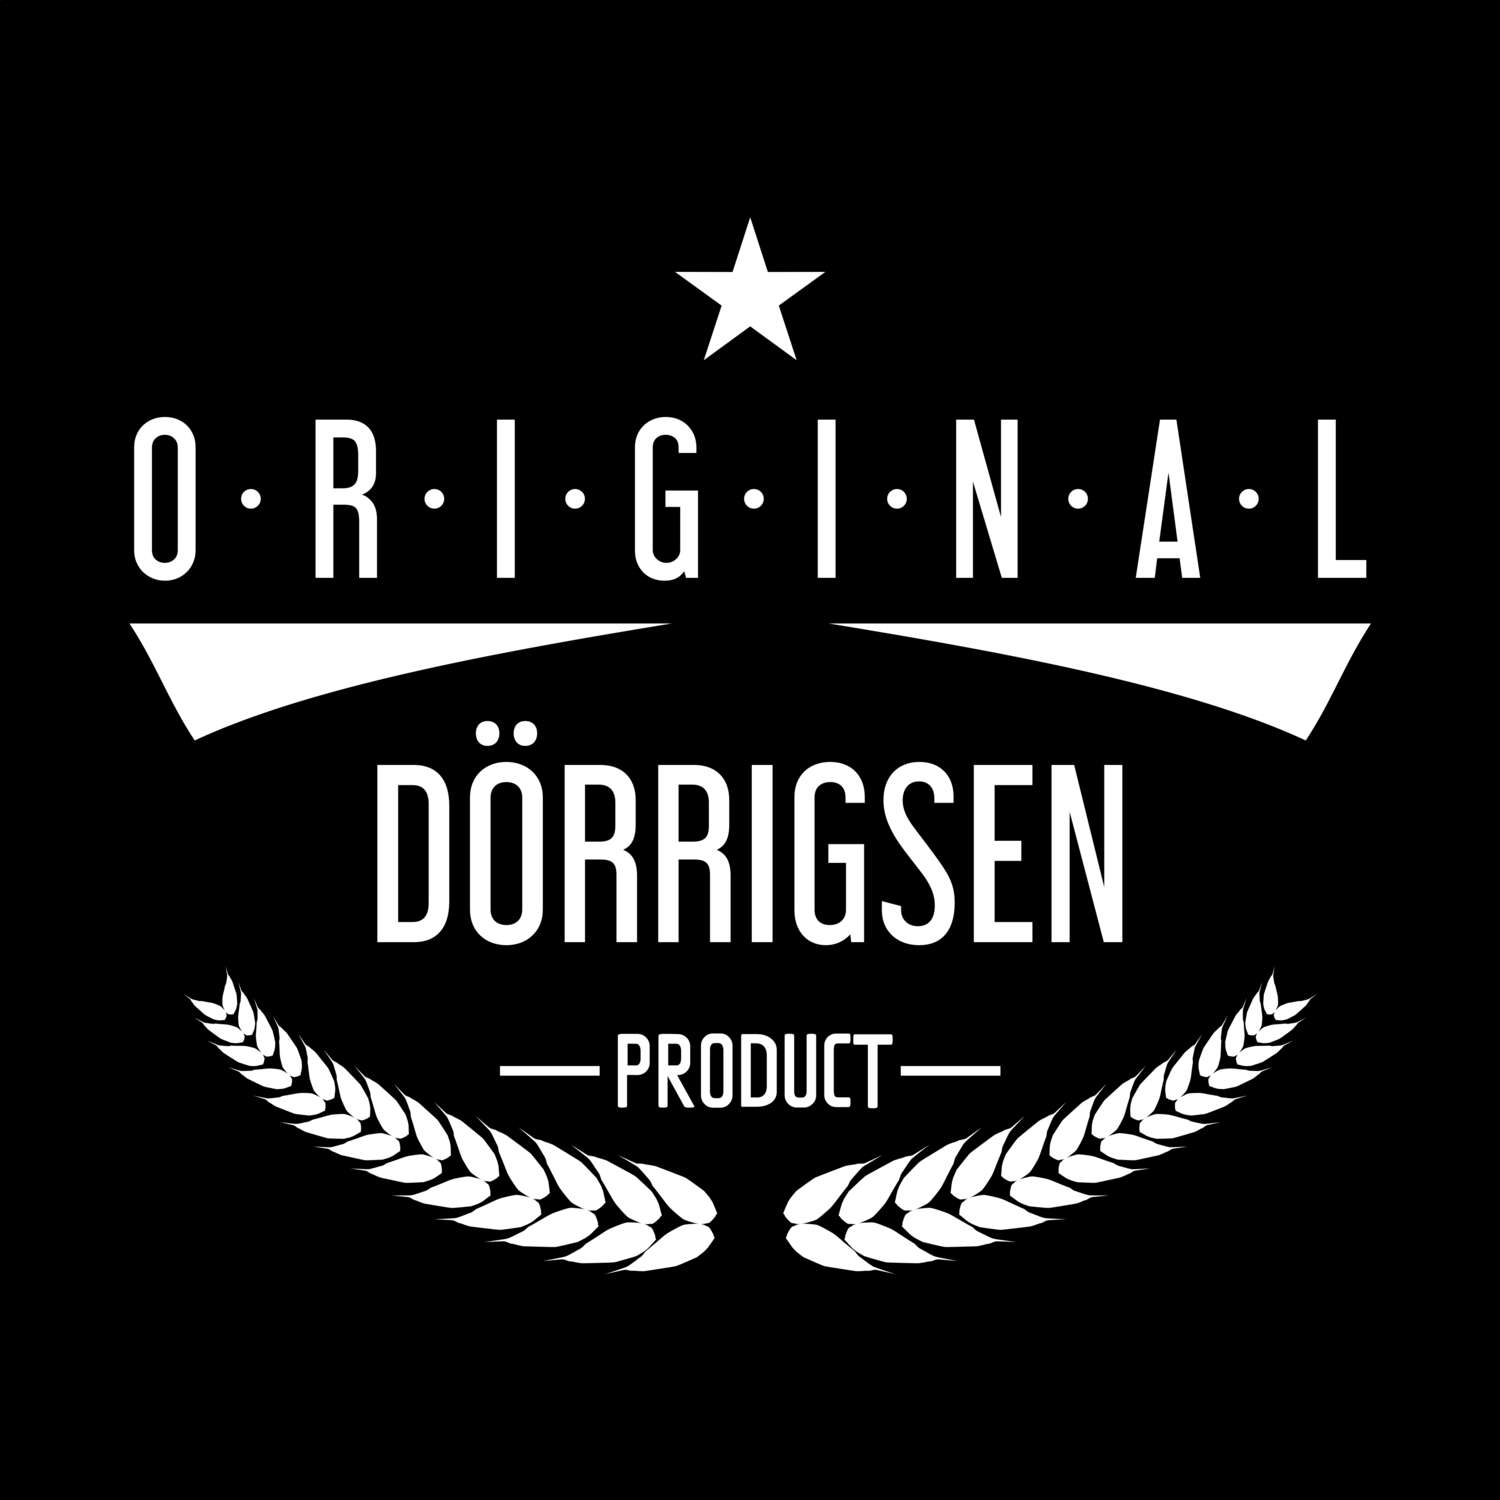 Dörrigsen T-Shirt »Original Product«